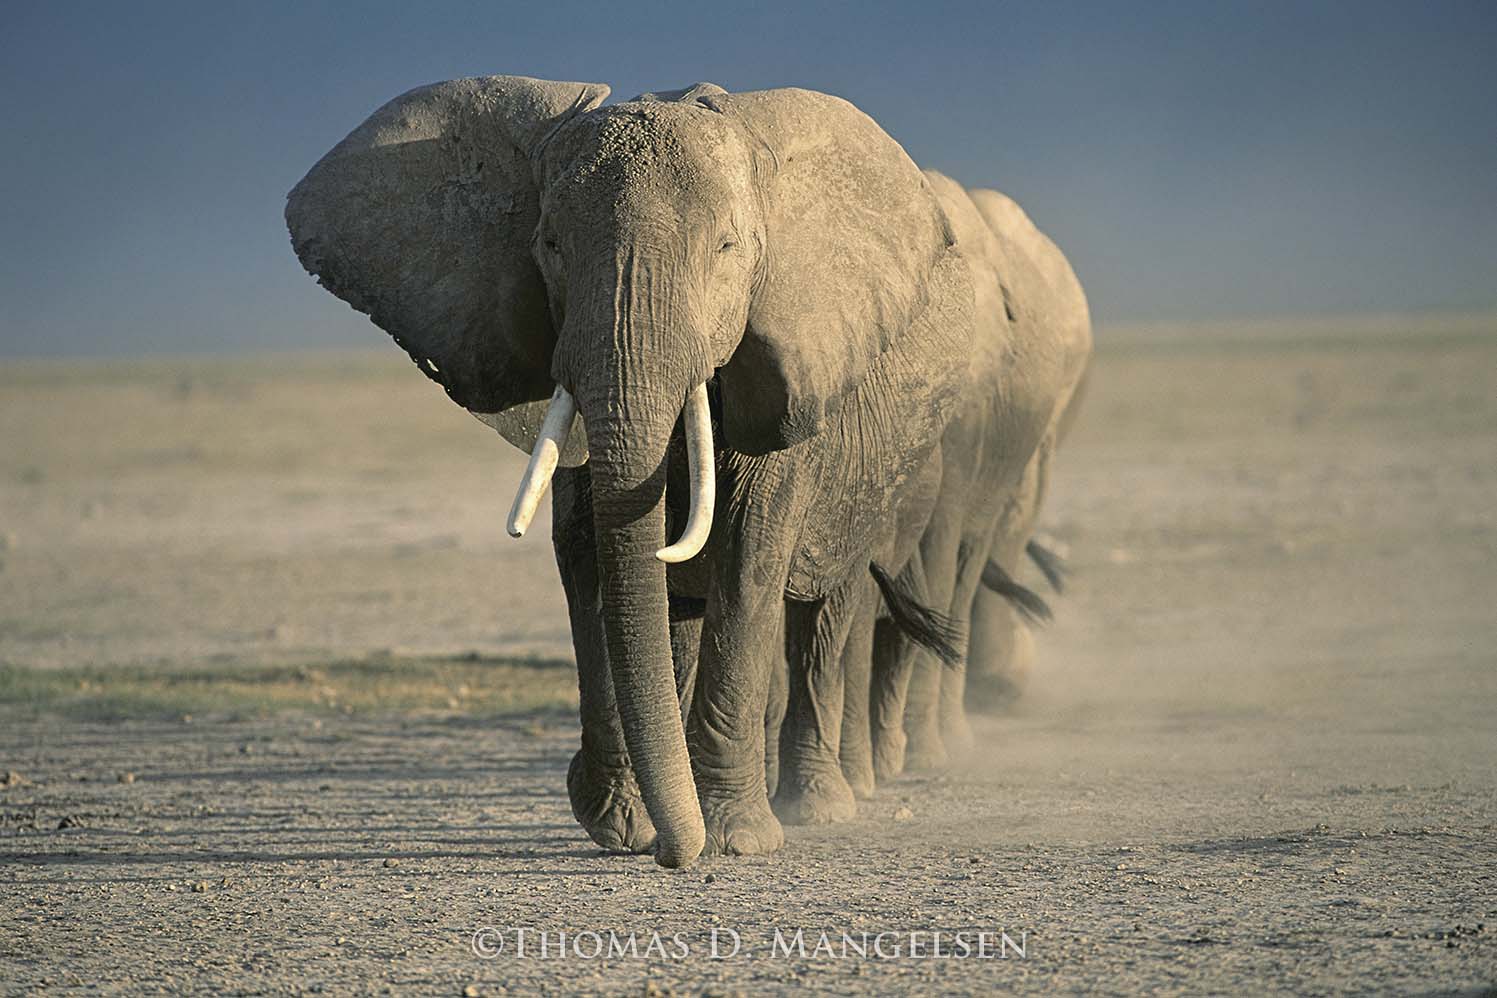 Amboseli Crossing, Amboseli National Park, Kenya, 1994. Thomas D. Mangelsen, Fujiflex Crystal Archive Print, 40 x 55 inches.